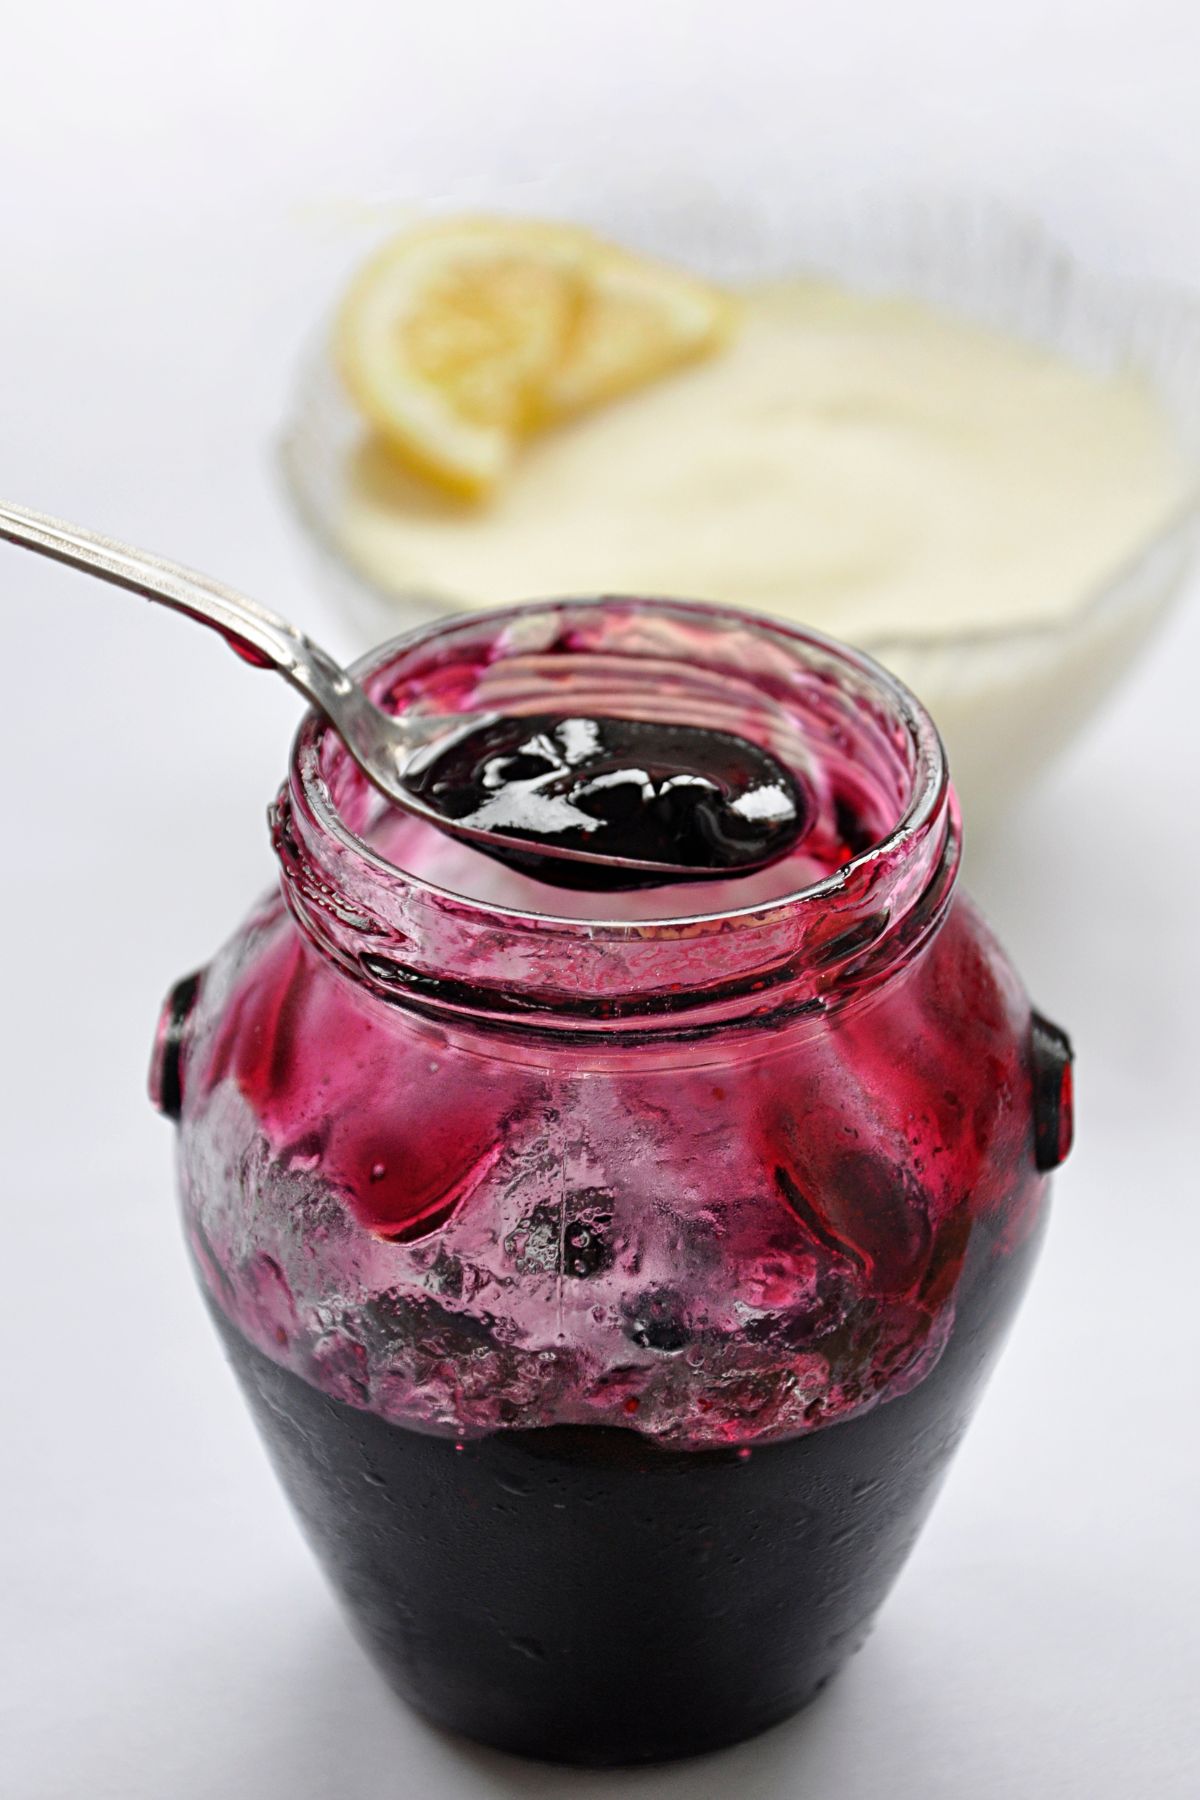 Blueberry jam jar and semolina pudding